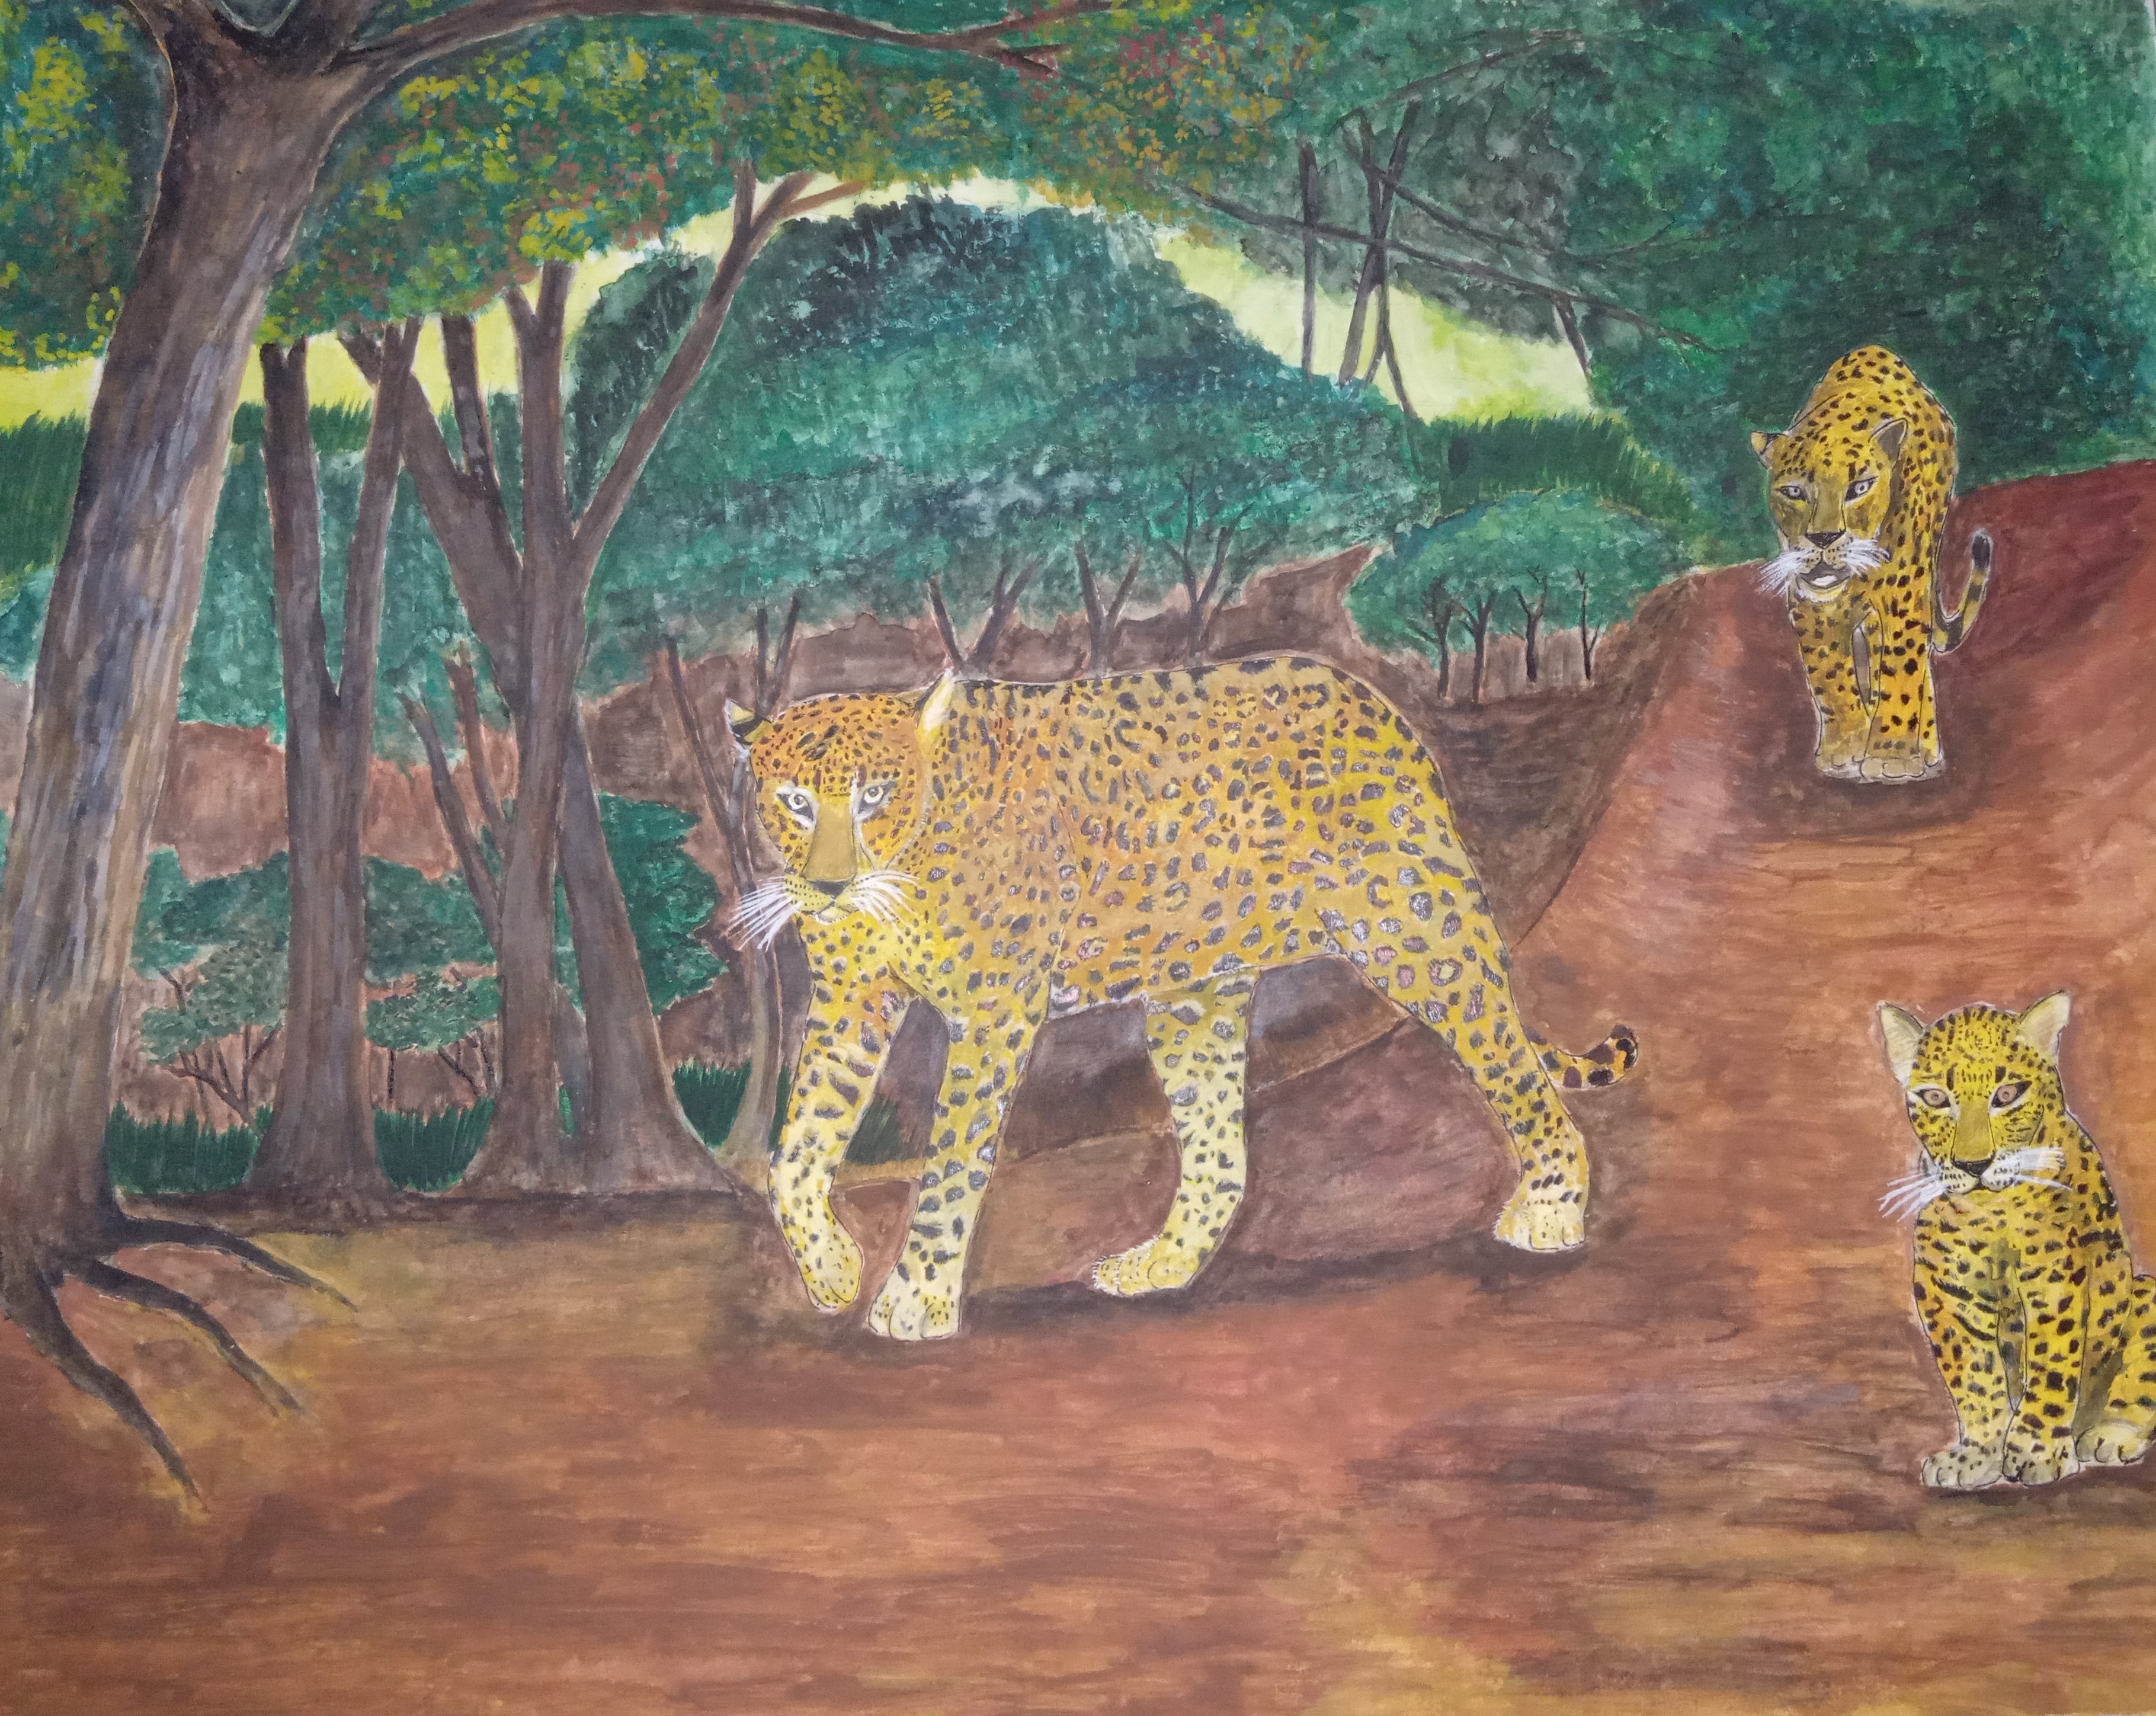 The Leopard Family by L.A.R.Harsha De Silva